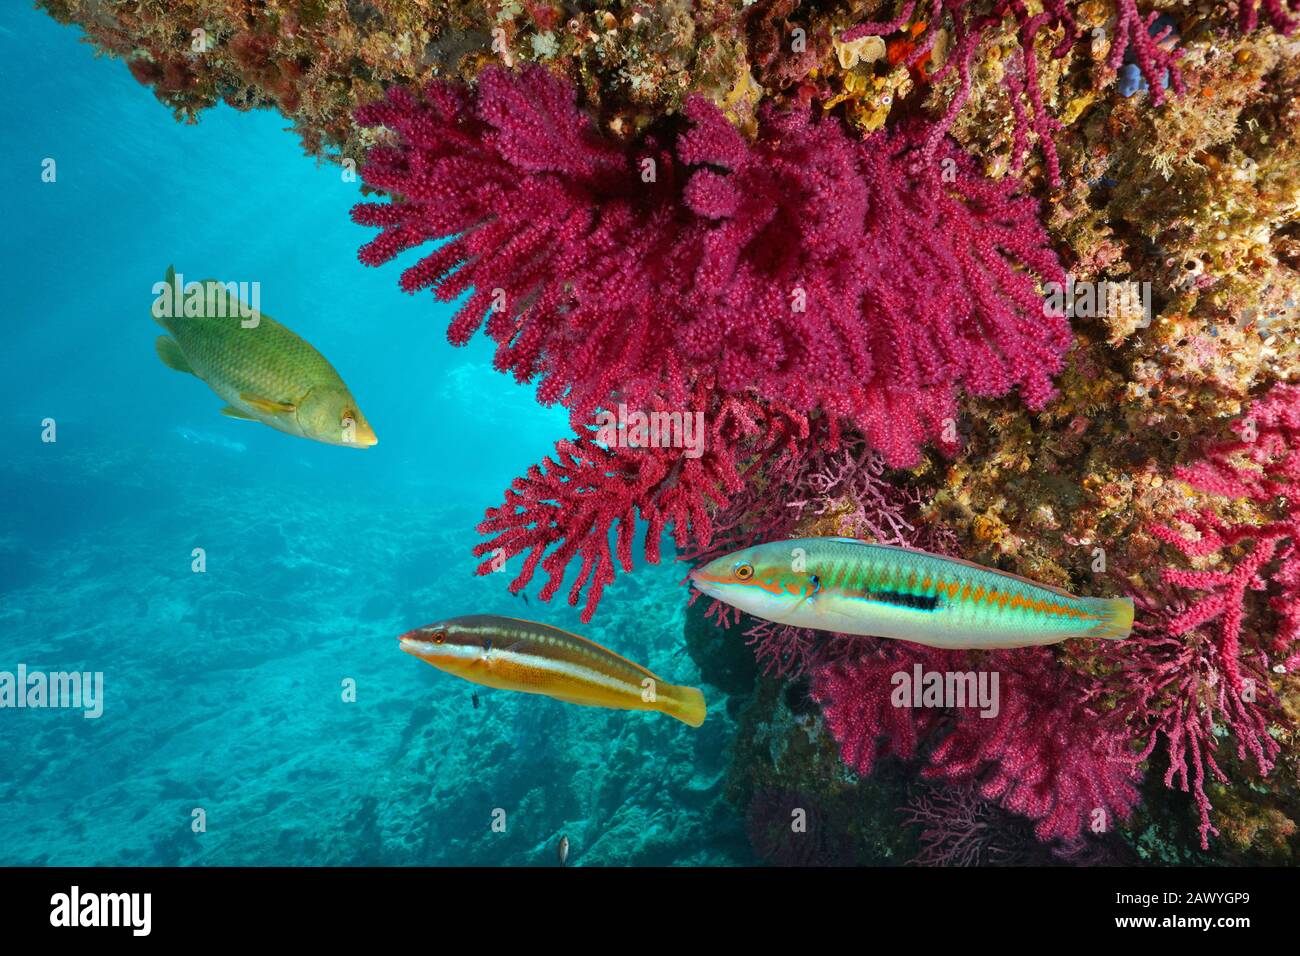 Mediterranean sea colorful marine life underwater, soft coral with wrasse fish, Cap de Creus, Costa Brava, Spain Stock Photo